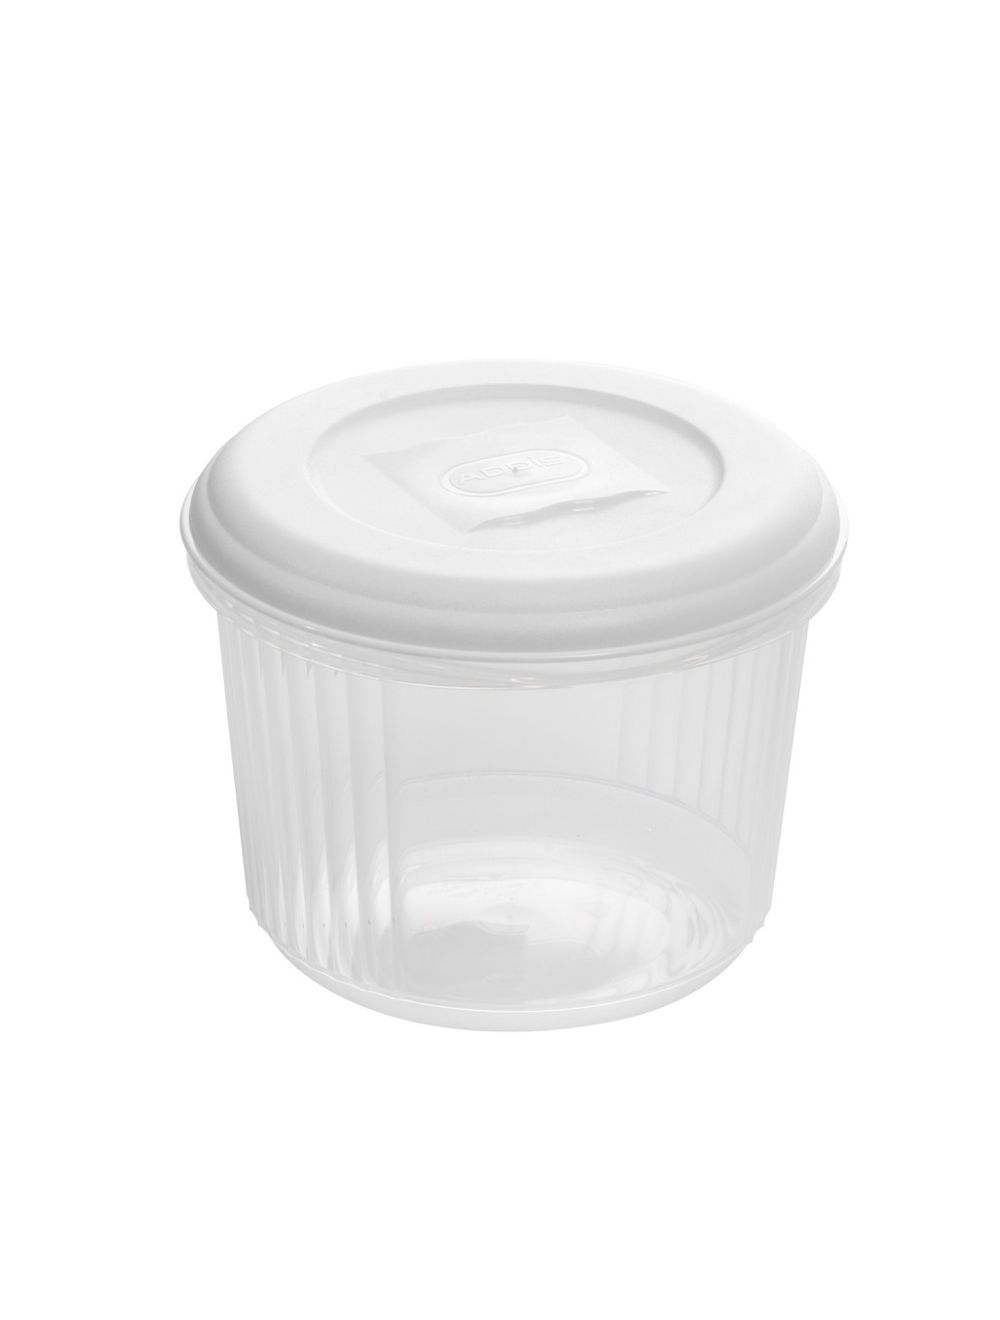 Foodsaver Round - White 1.5L Assorted